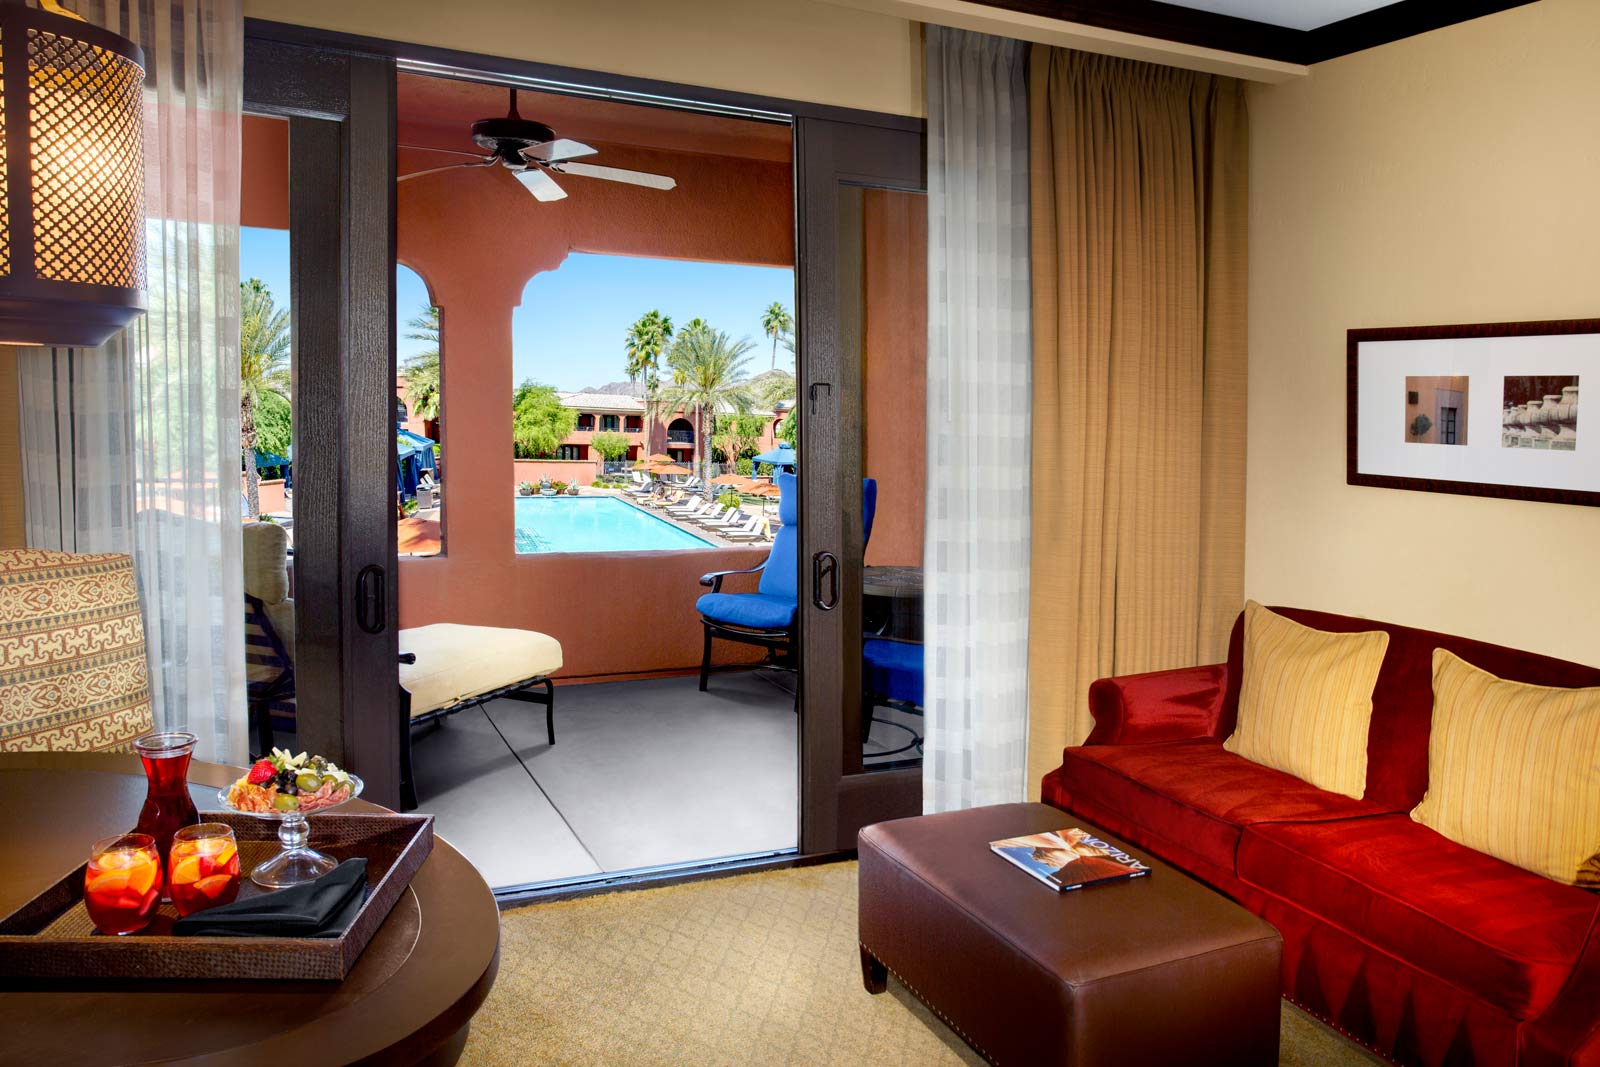 Omni Scottsdale Resort & Spa at Montelucia, Scottsdale, AZ 